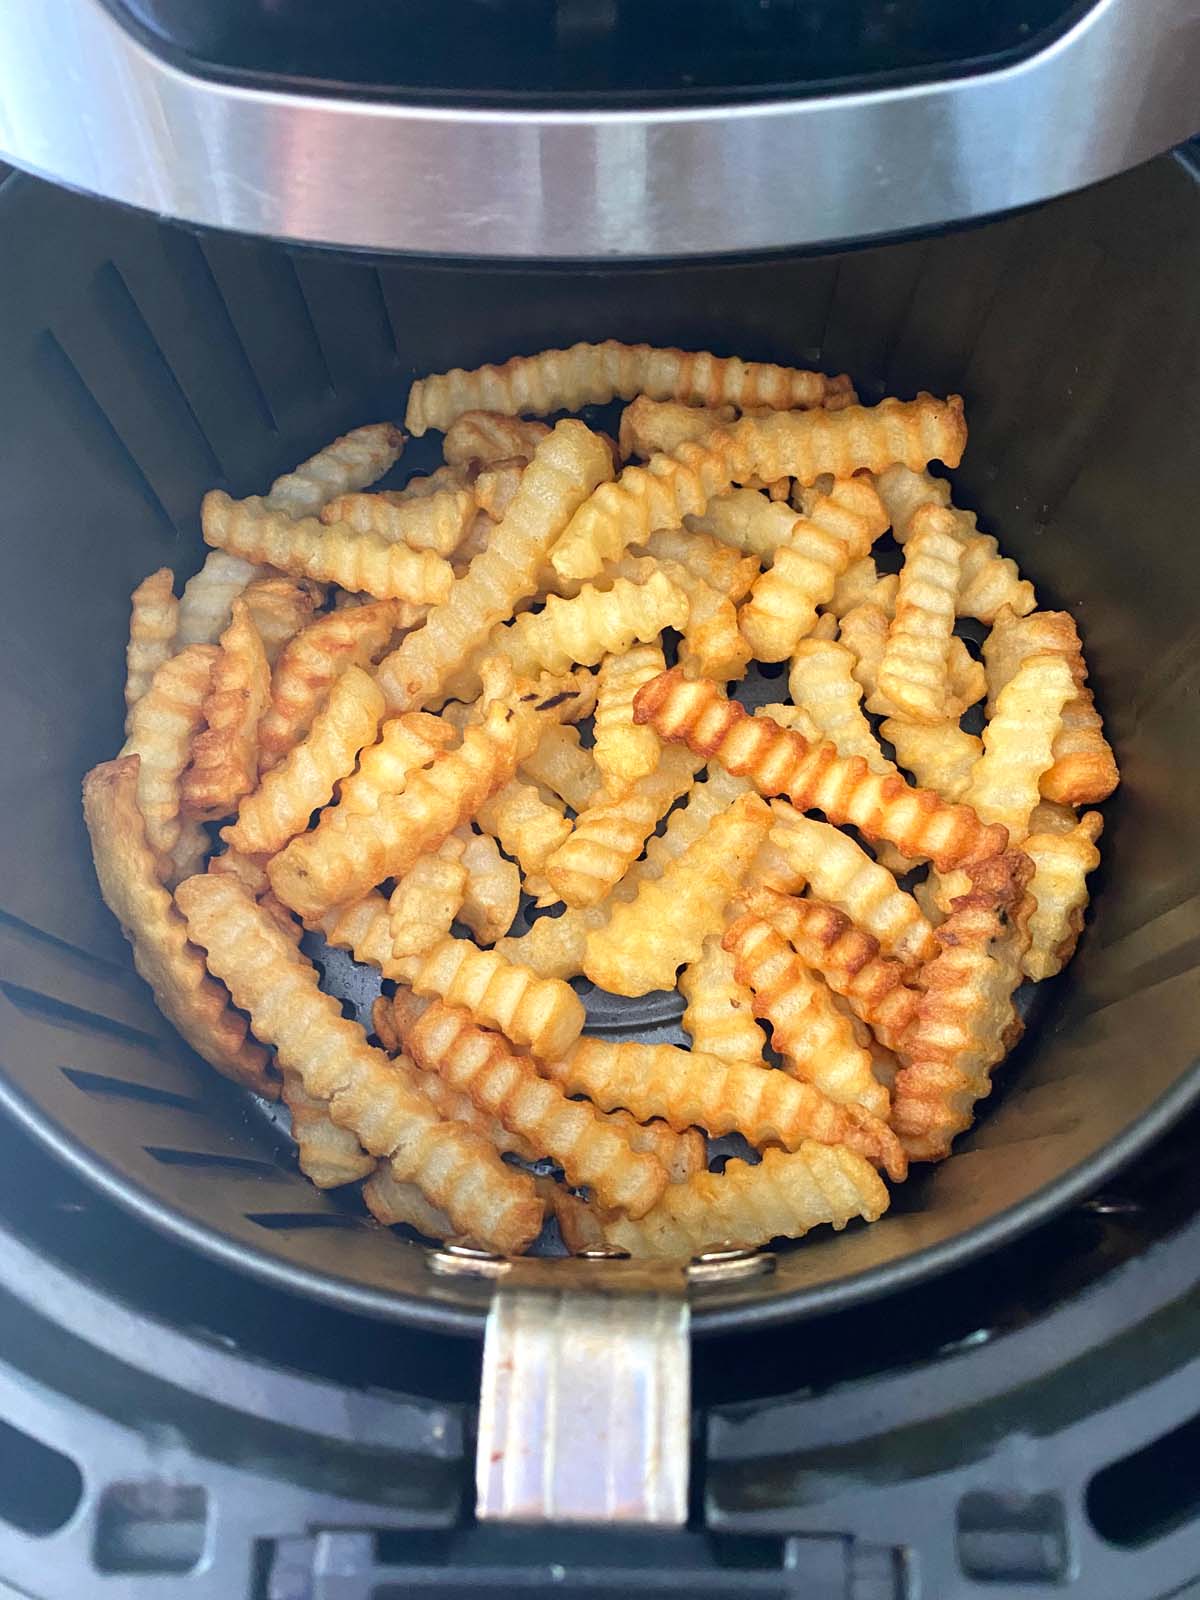 https://www.melaniecooks.com/wp-content/uploads/2022/05/Air-Fryer-Frozen-Crinkle-Fries-3.jpg